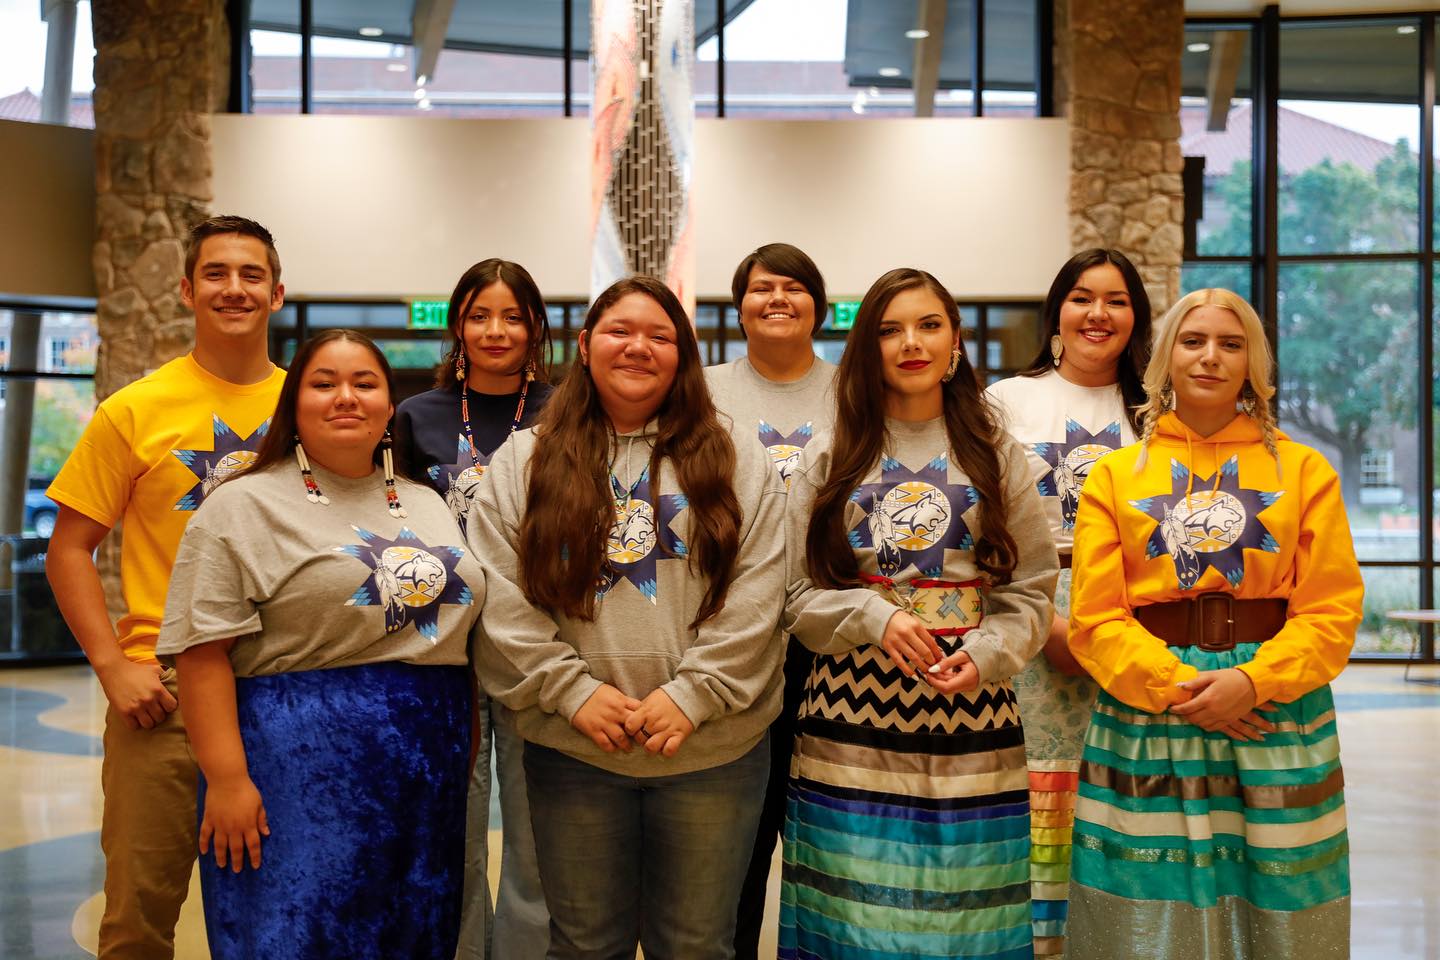 8 American Indian individuals smiling at the camera